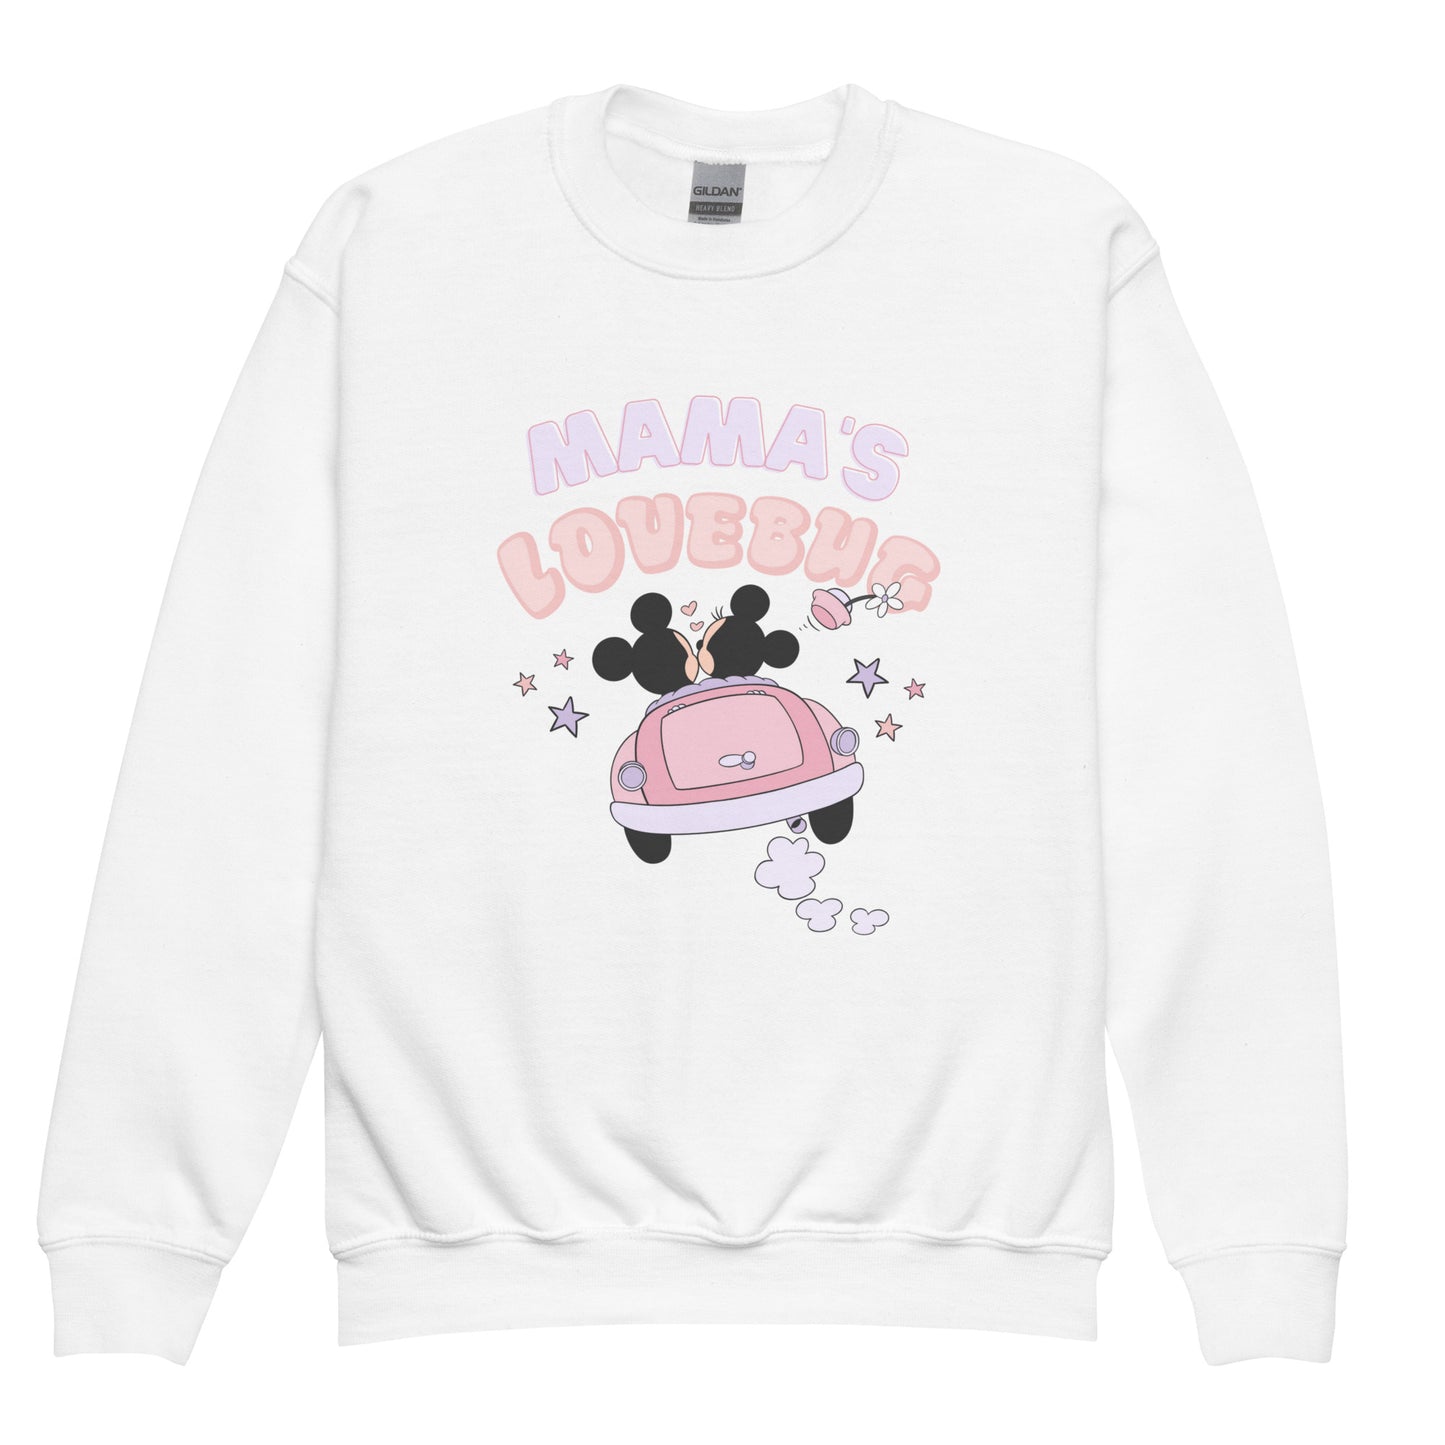 Lovebug youth crewneck sweatshirt